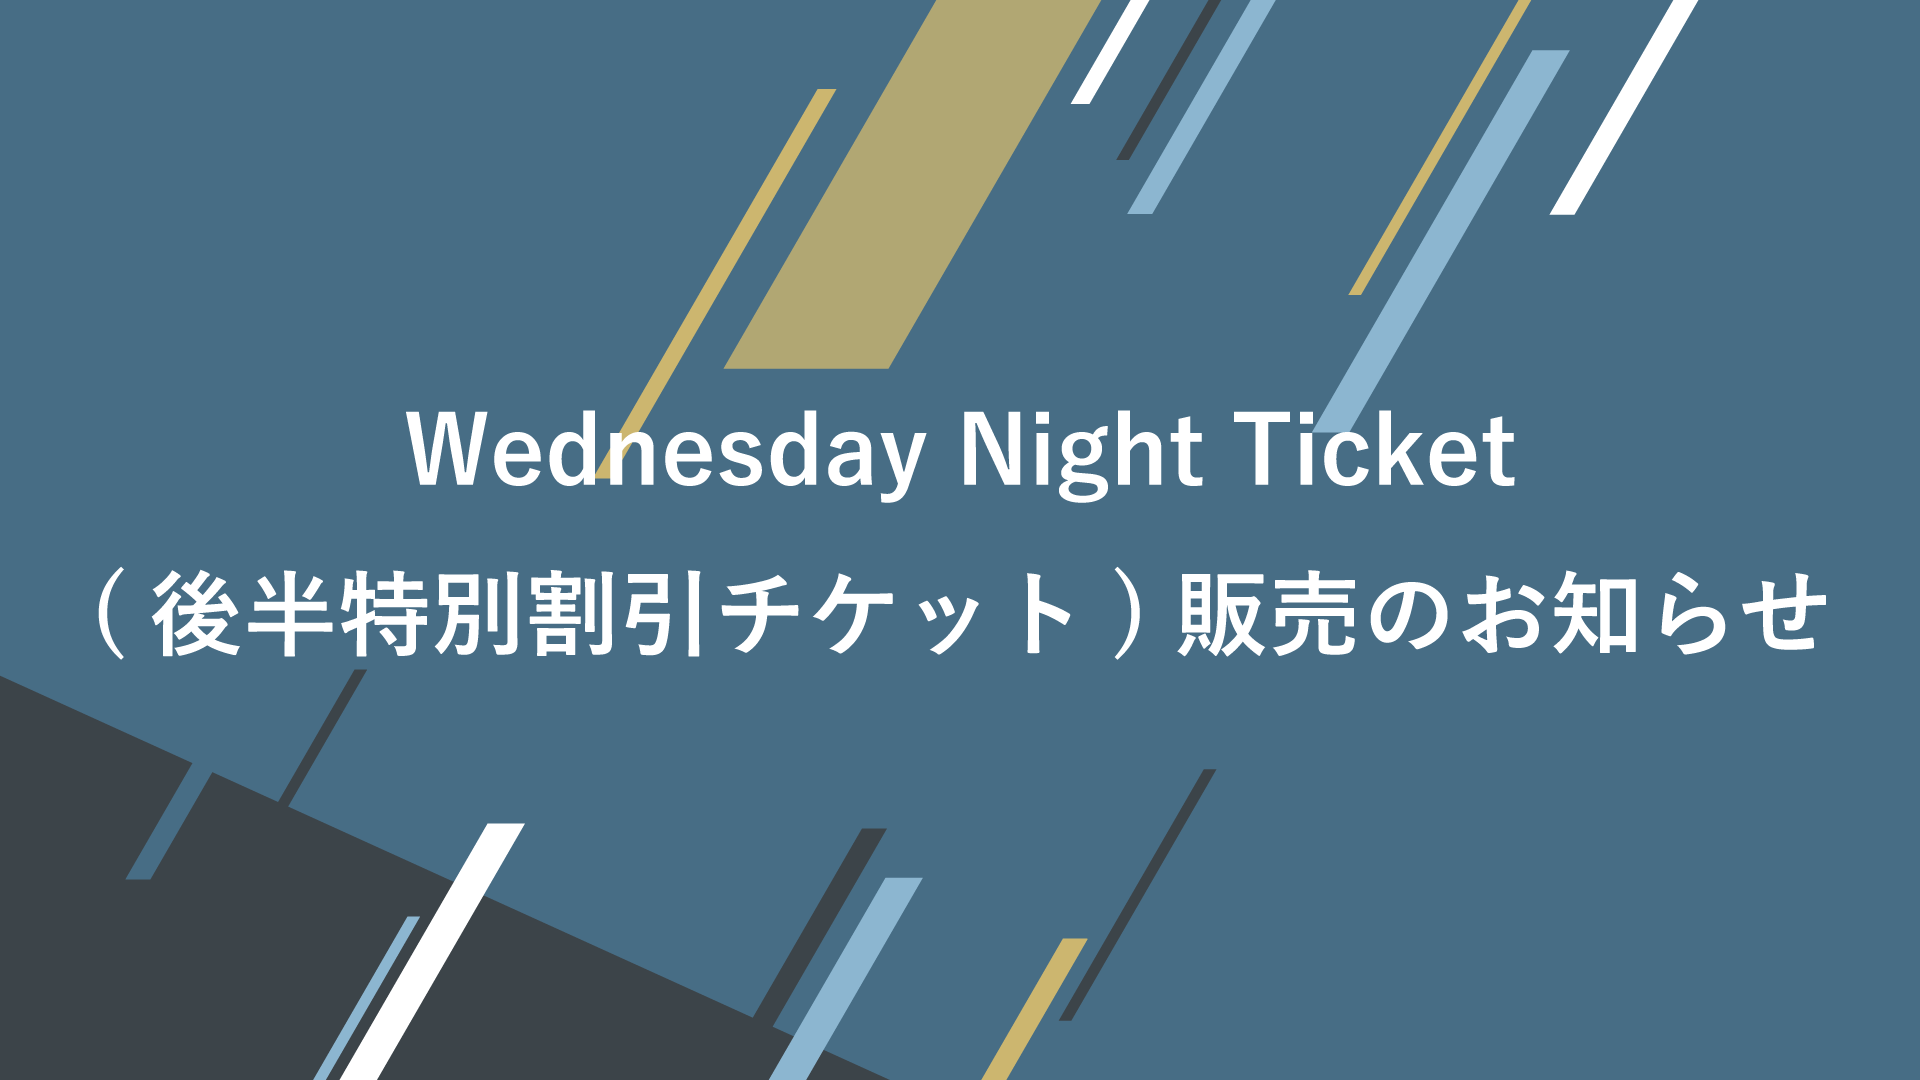 Wednesday Night Ticket 後半特別割引チケット 販売のお知らせ 横浜fcオフィシャルウェブサイト